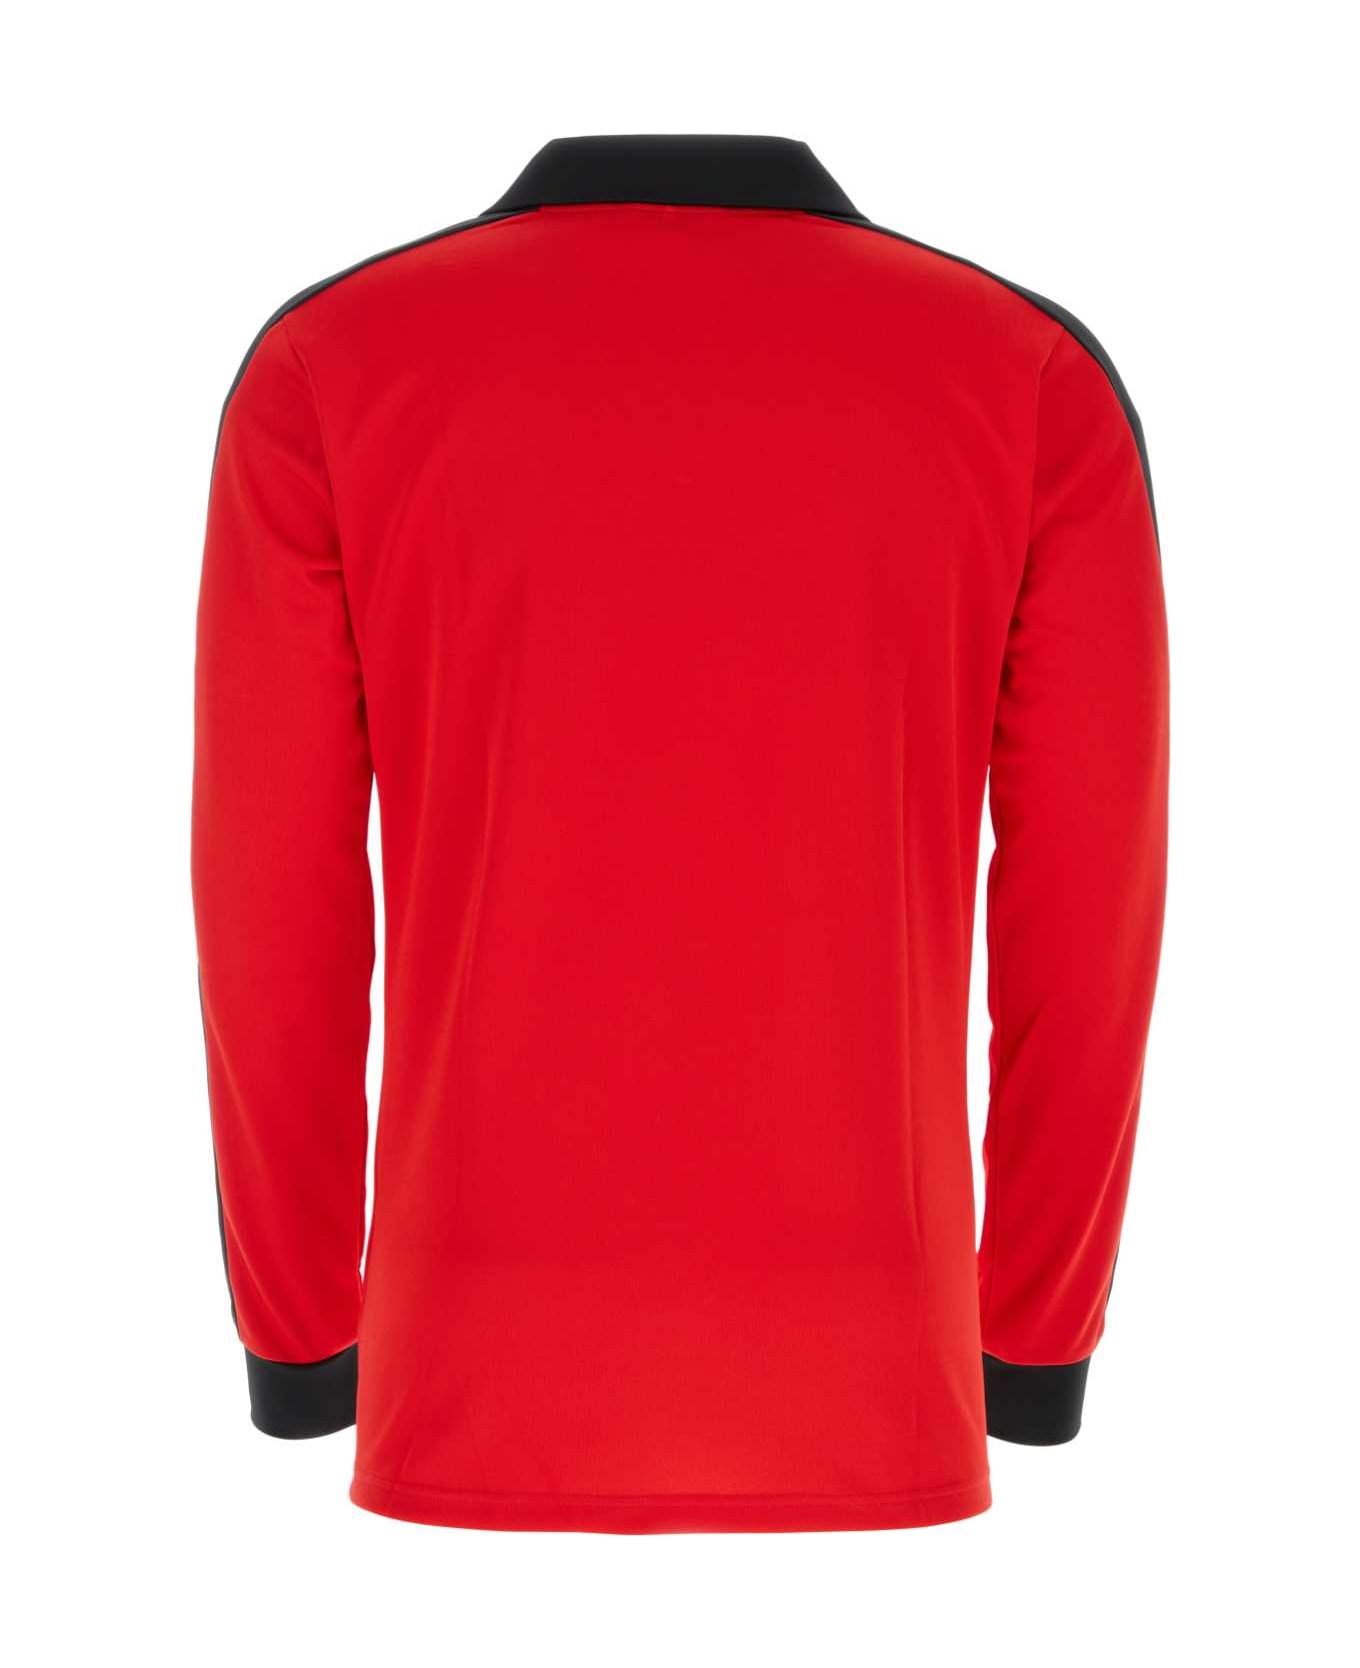 Wales Bonner Red Polyester Oversize T-shirt - REDANDBLACK シャツ